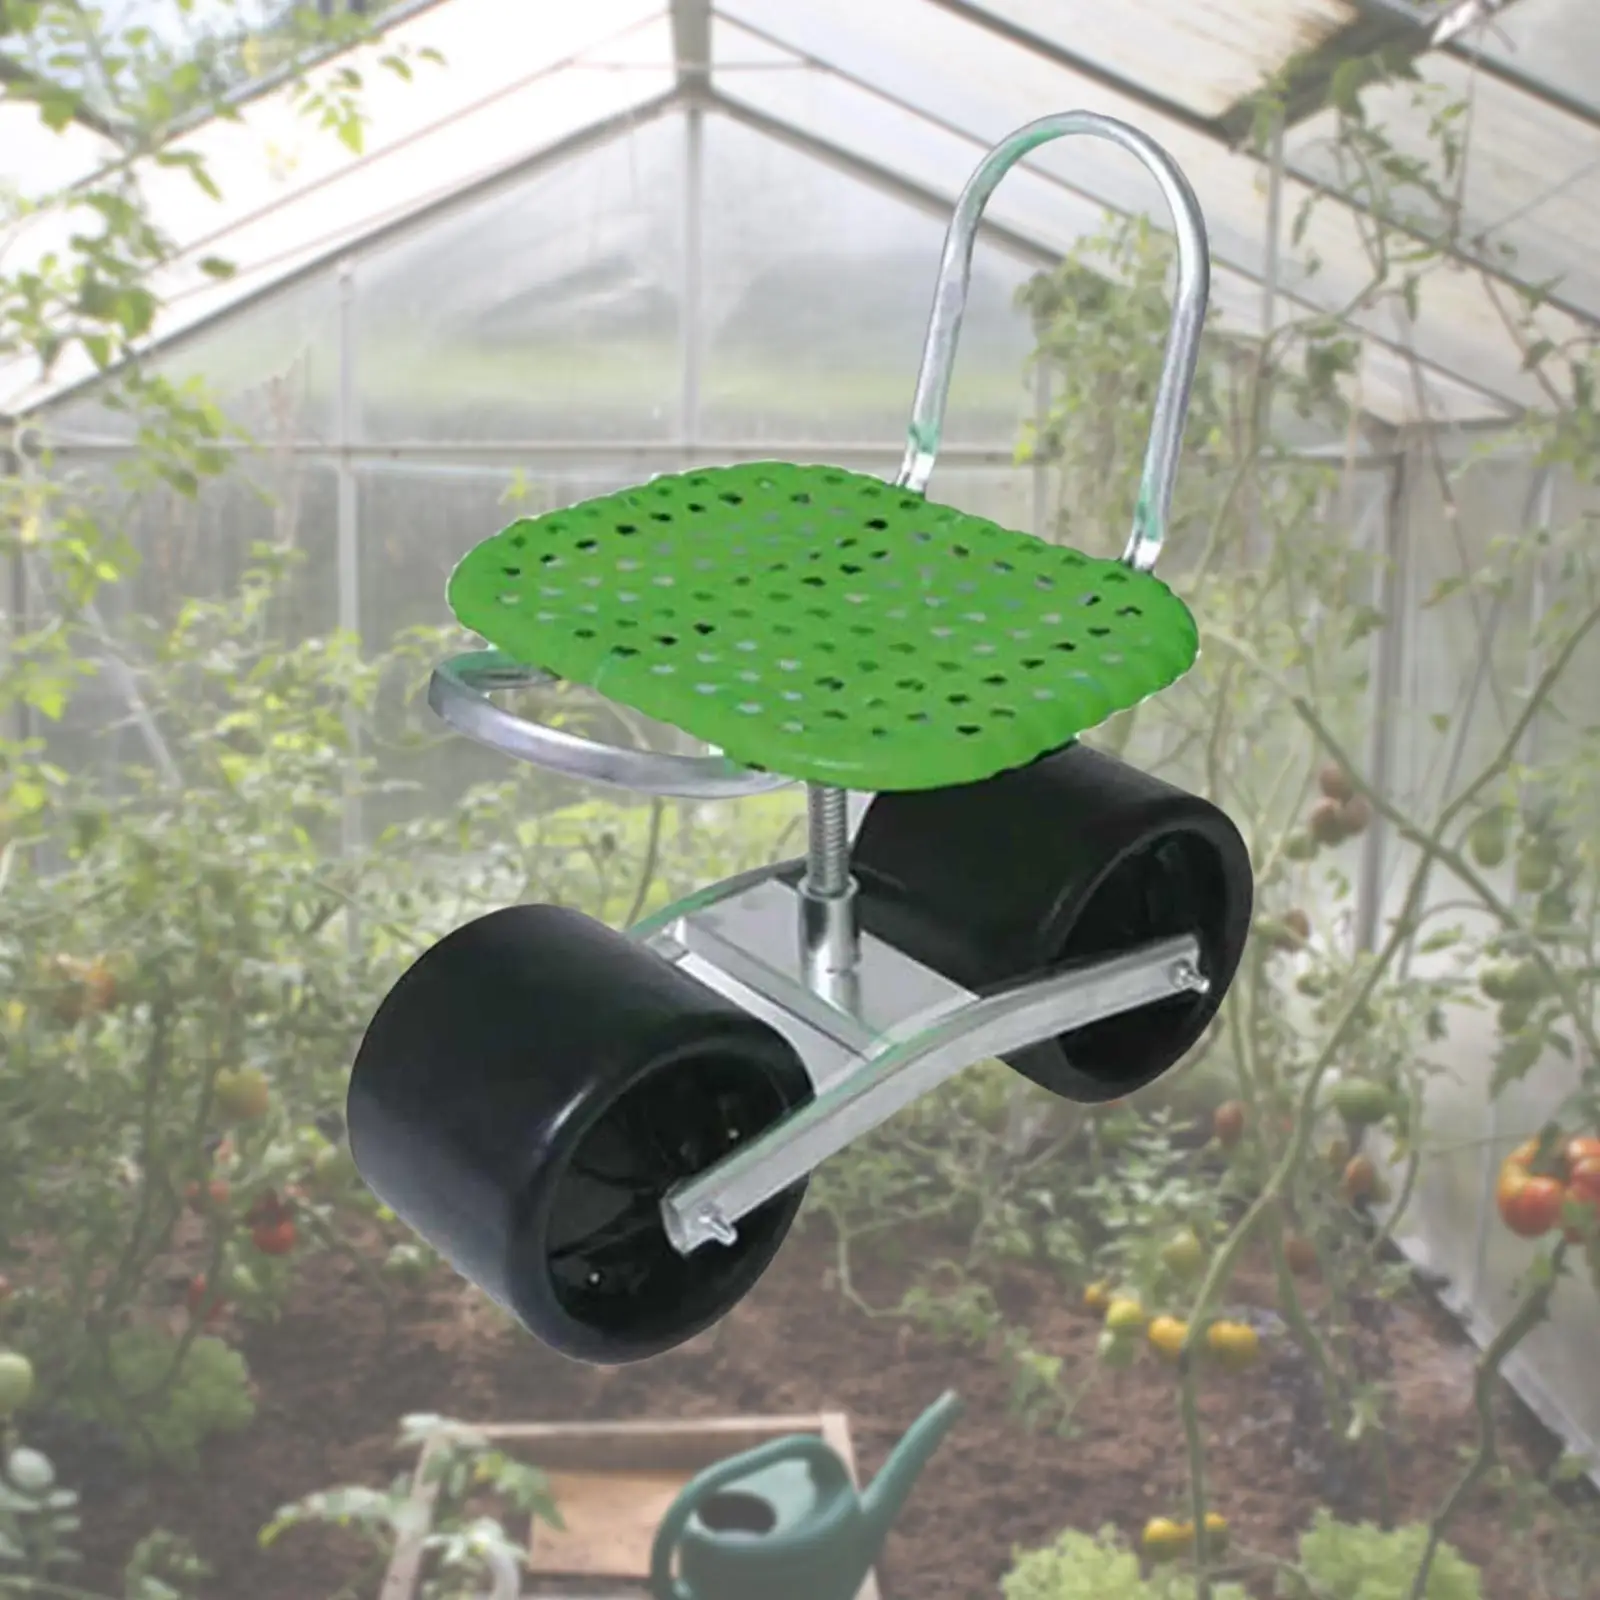 Garden Stool Height Adjustable Heavy Duty for Gardening 360° Rotating Patio Yard Stool Cart for Yards Car Repair Garden Picking